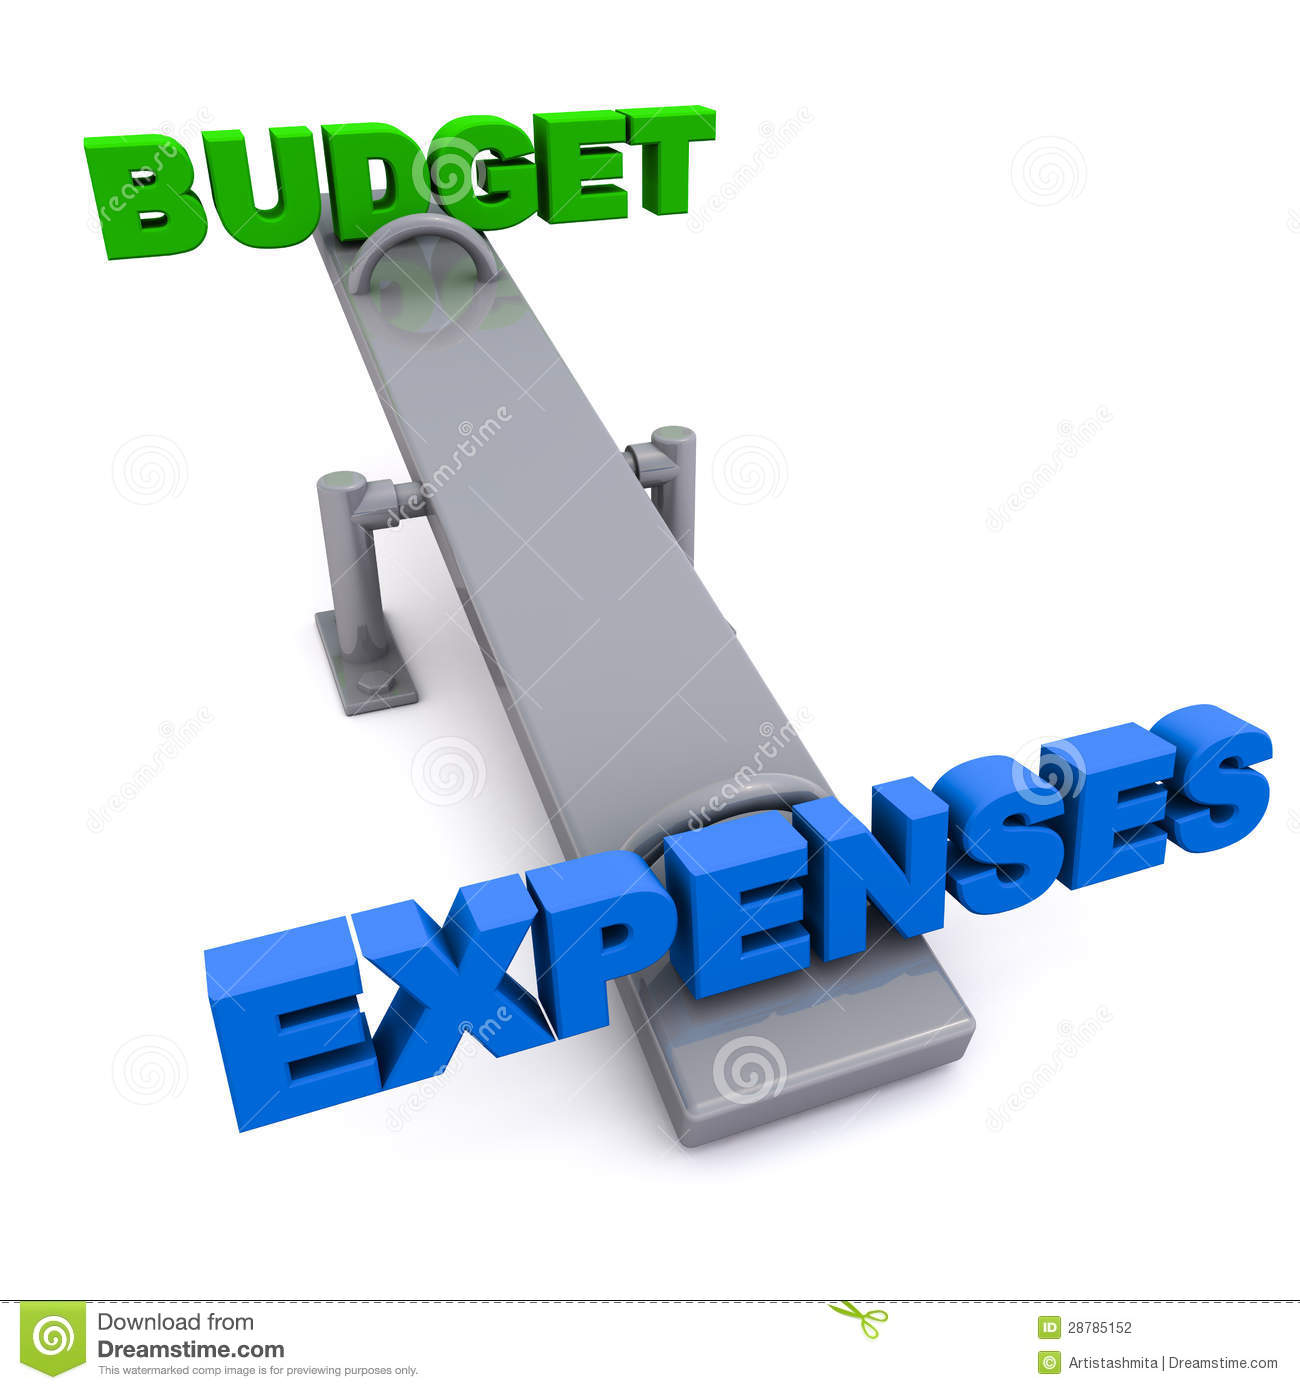 Budget clipart cute. Super ideas calculator stock